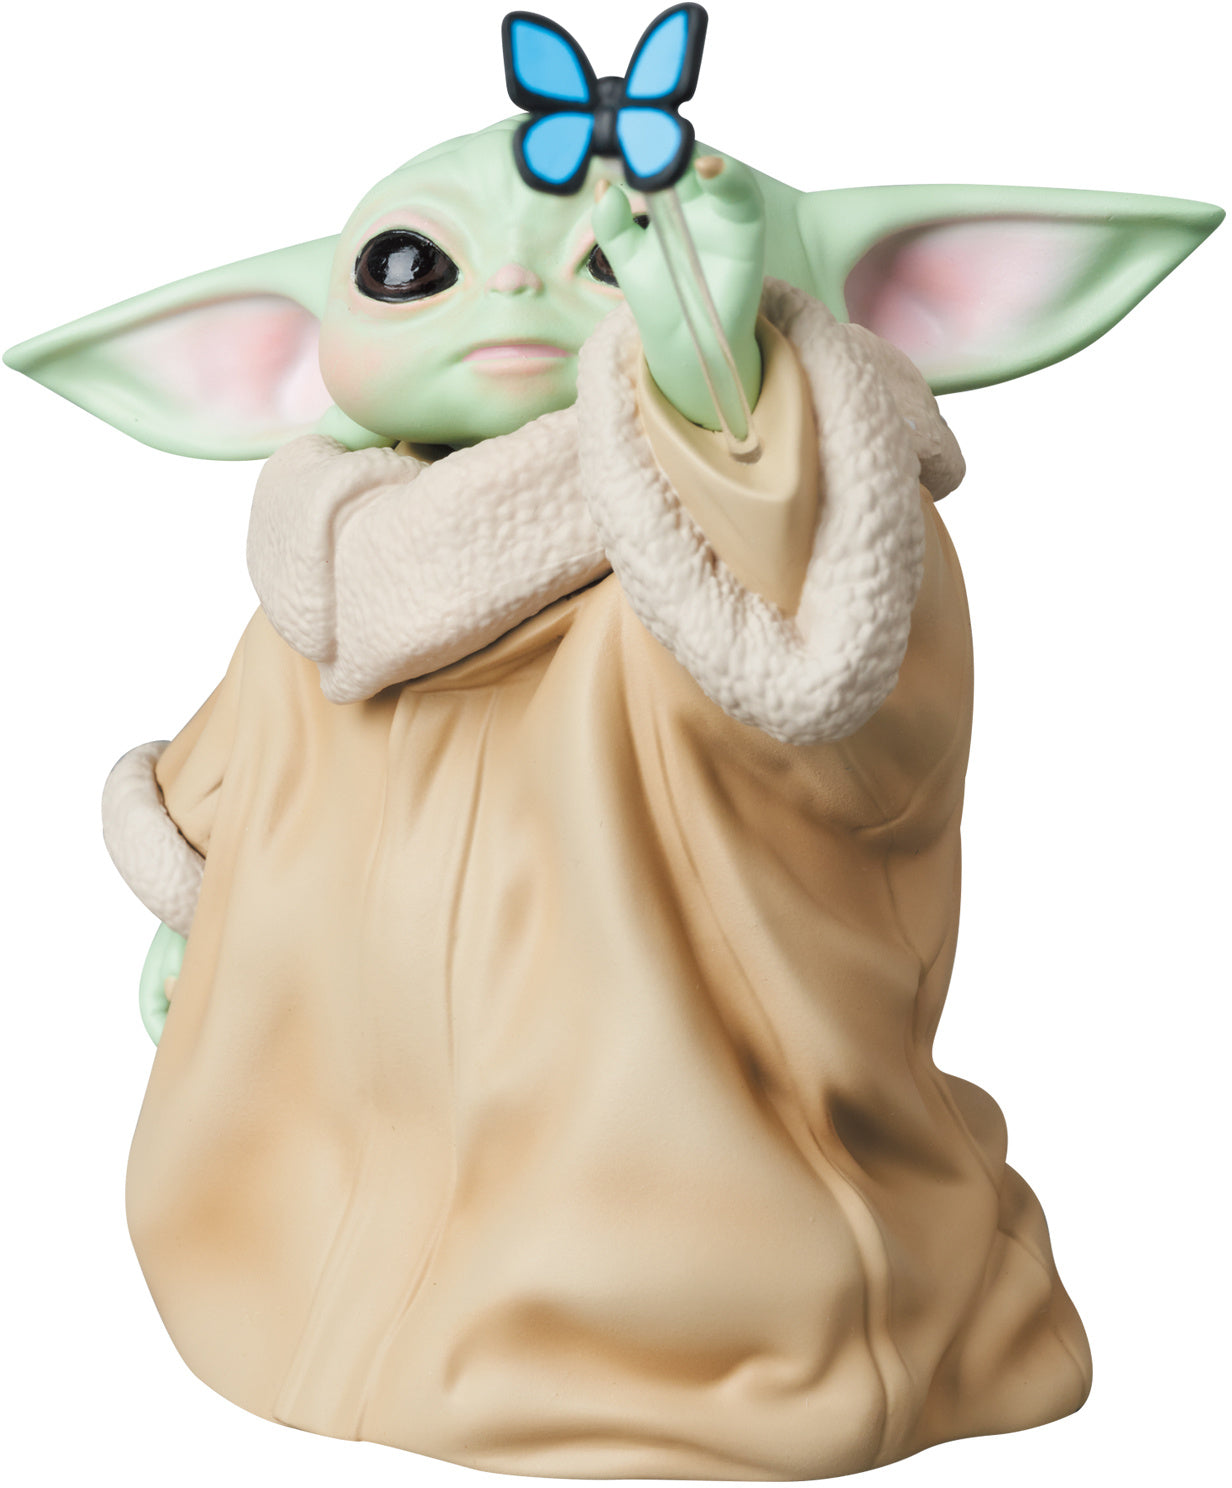 Star Wars Olympus Grogu Figure- Baby Yoda Figure